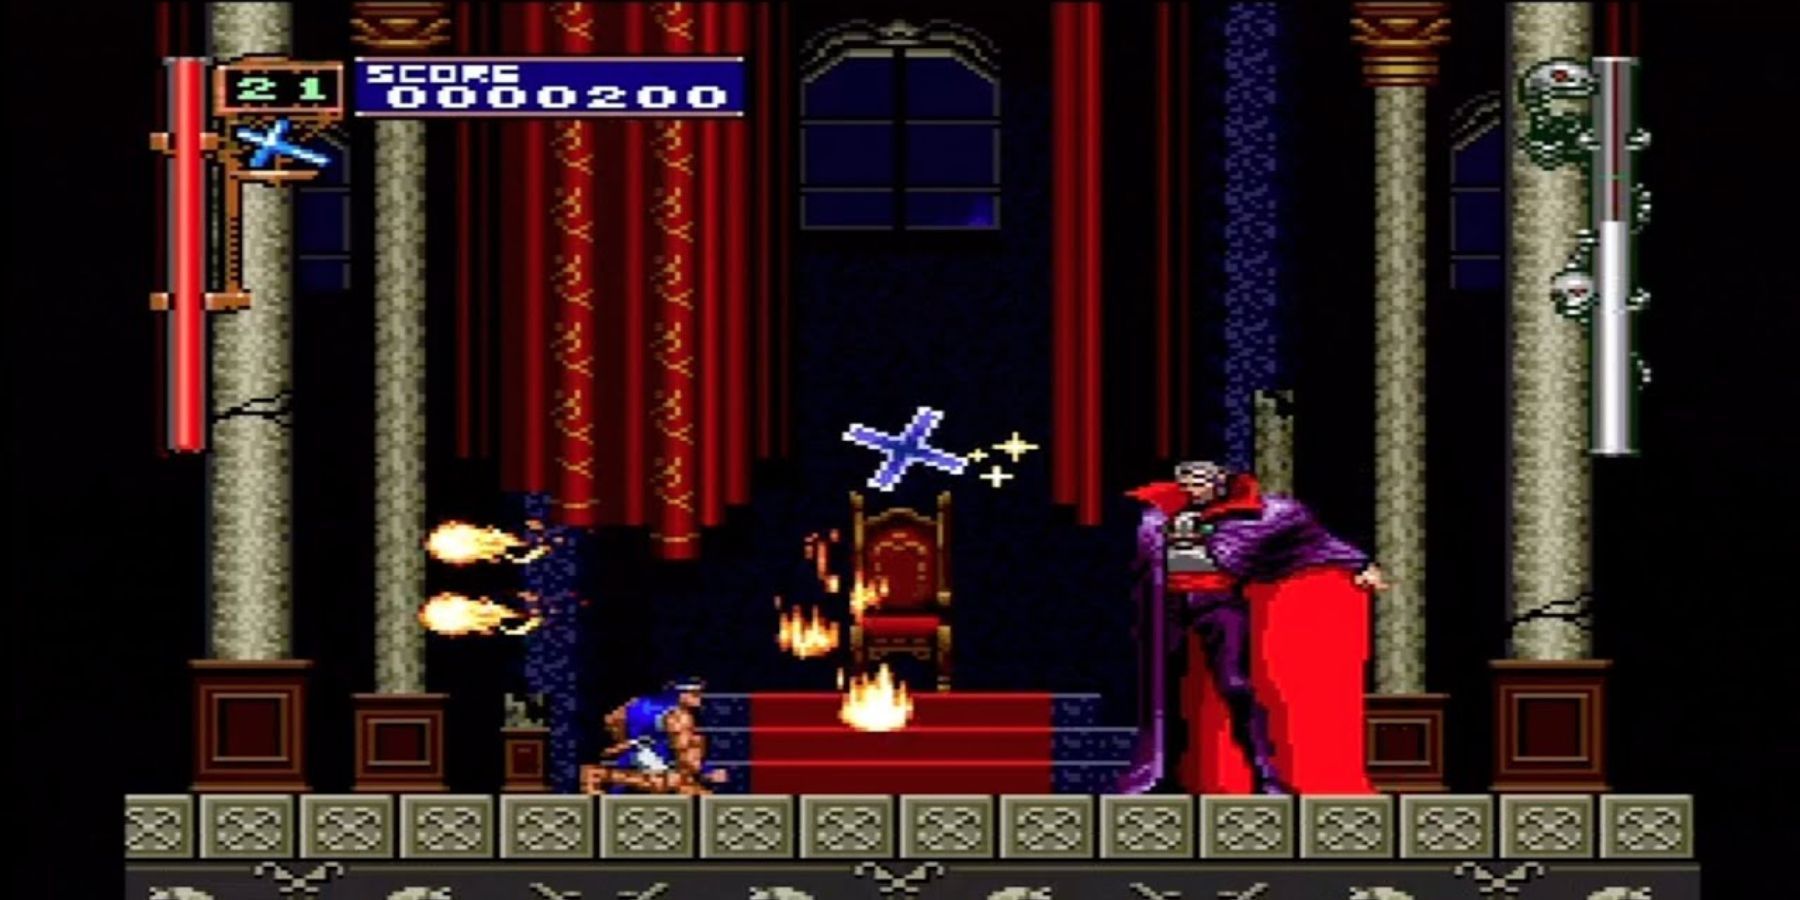 Richter Belmont battling Dracula